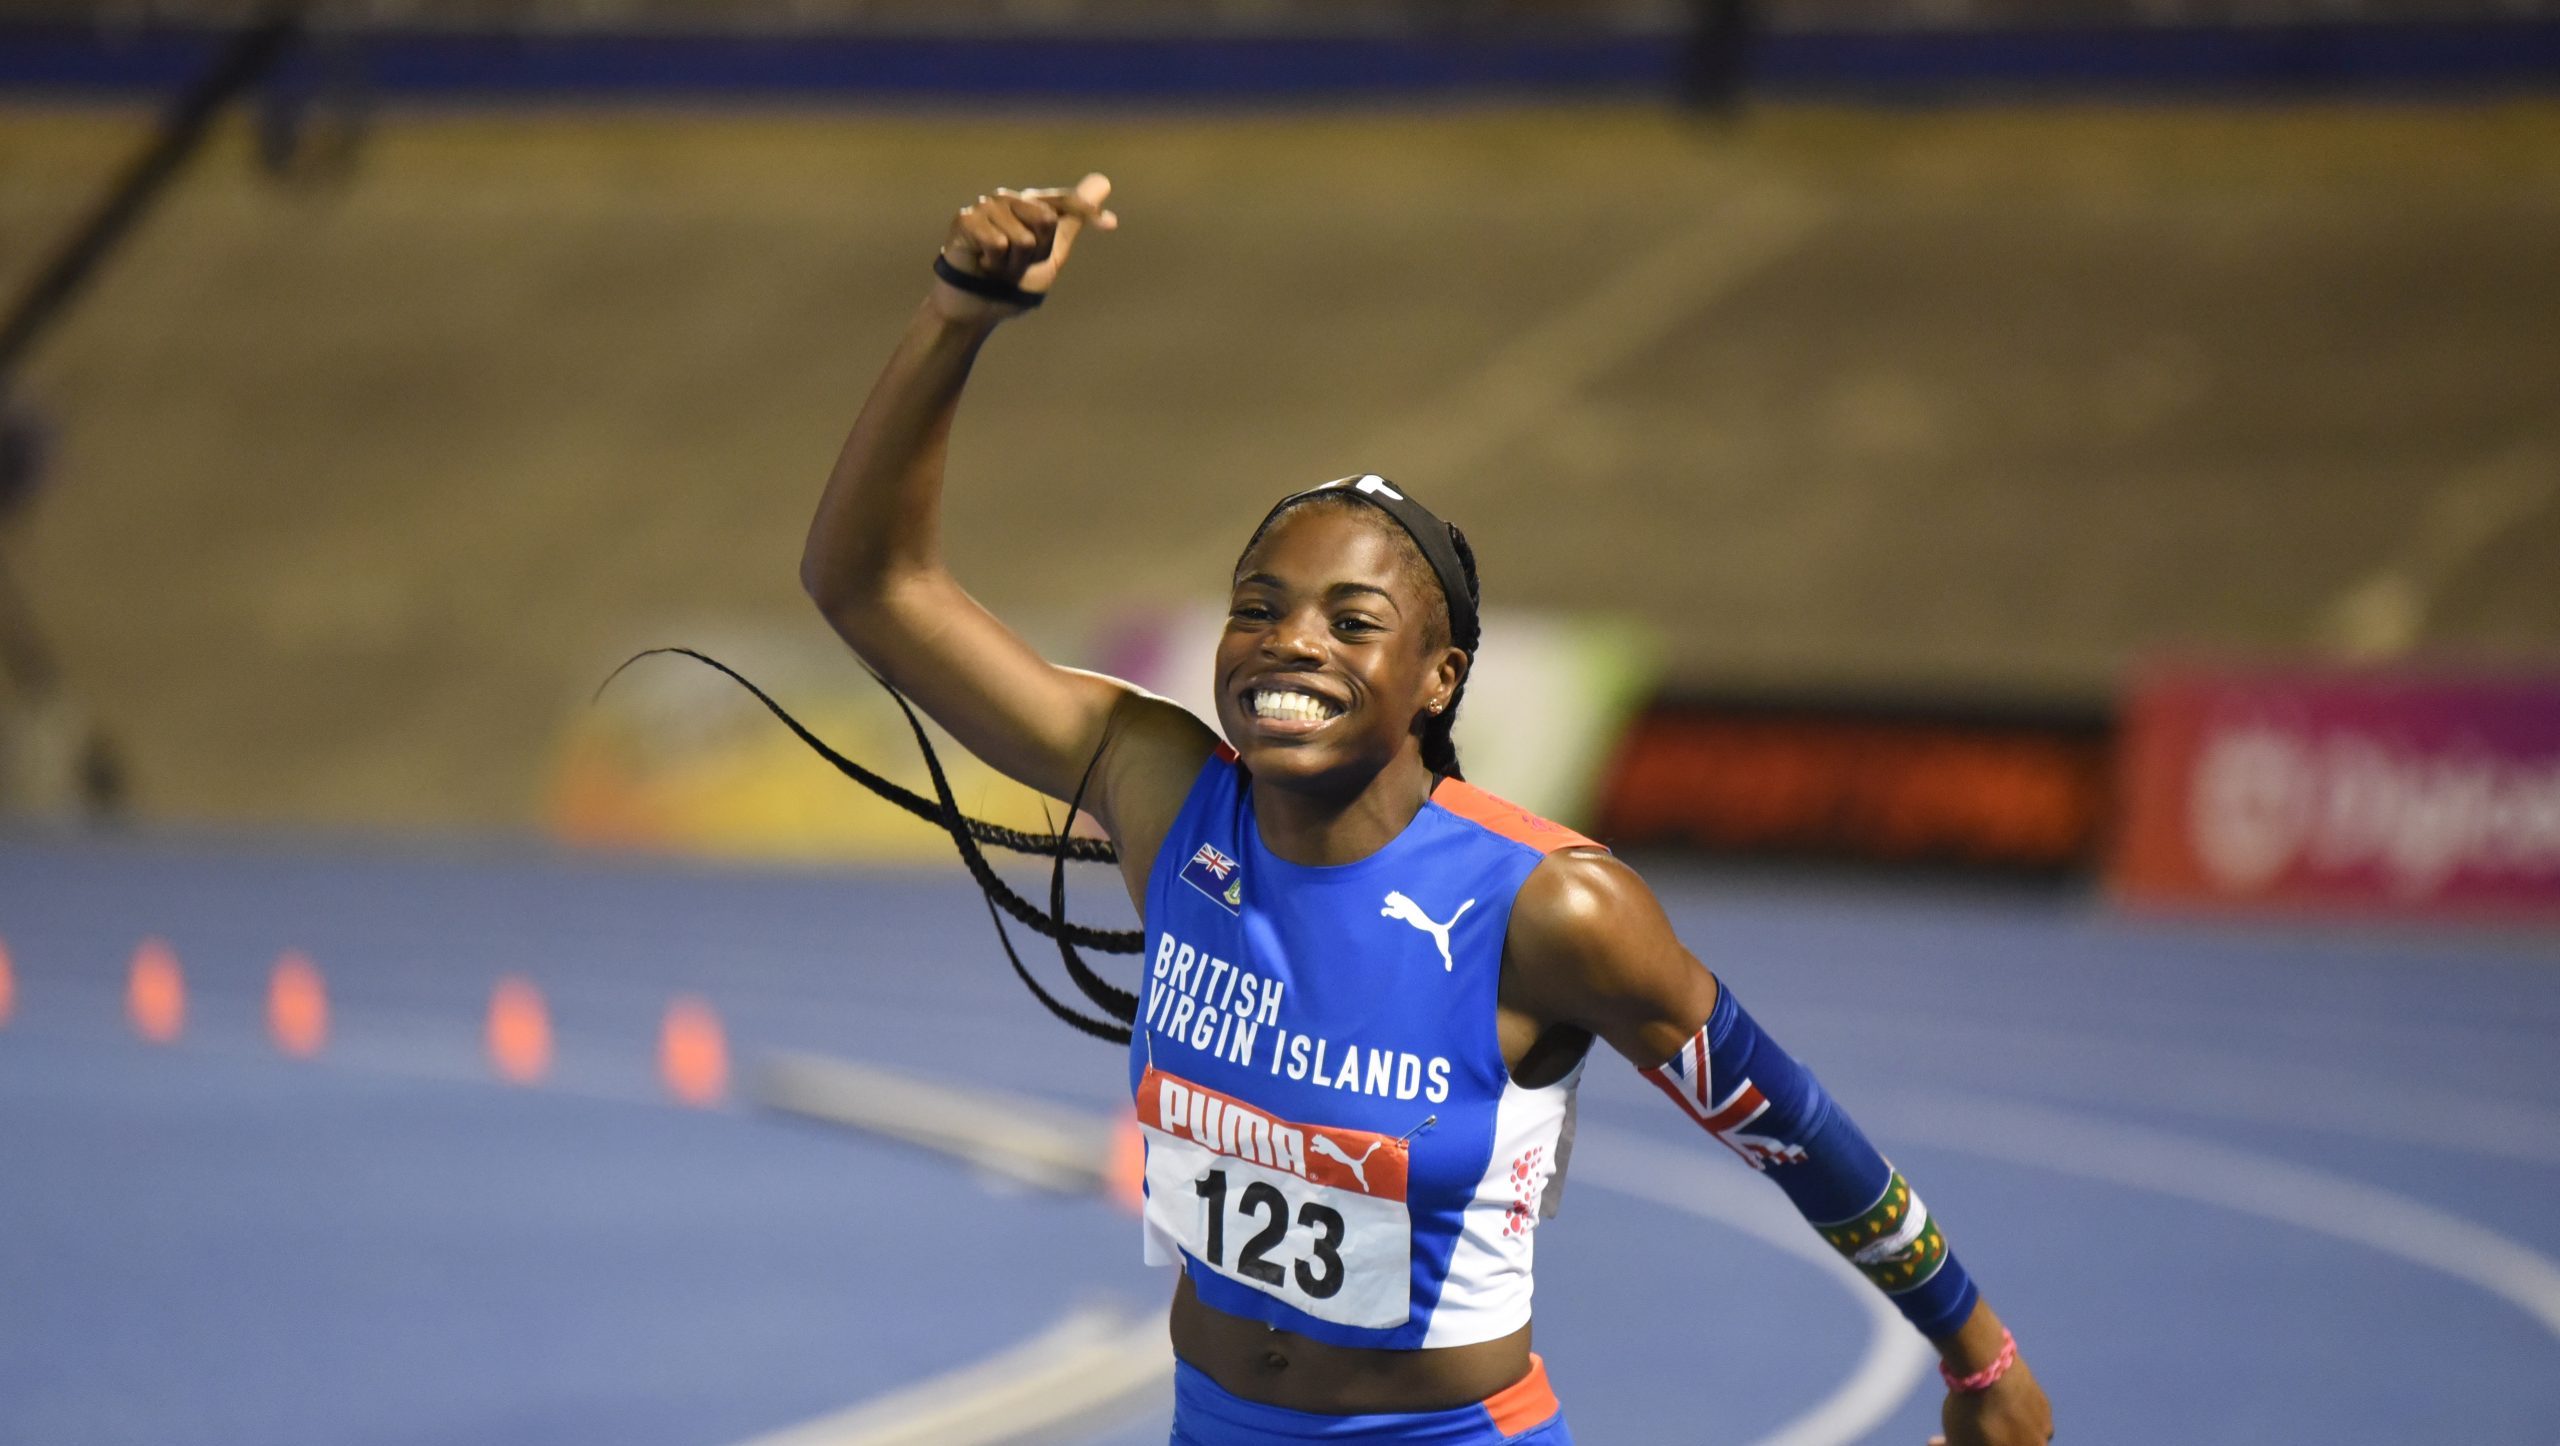 Adaejah Hodge scores big U17 girls 100m victory at Carifta Games 2022